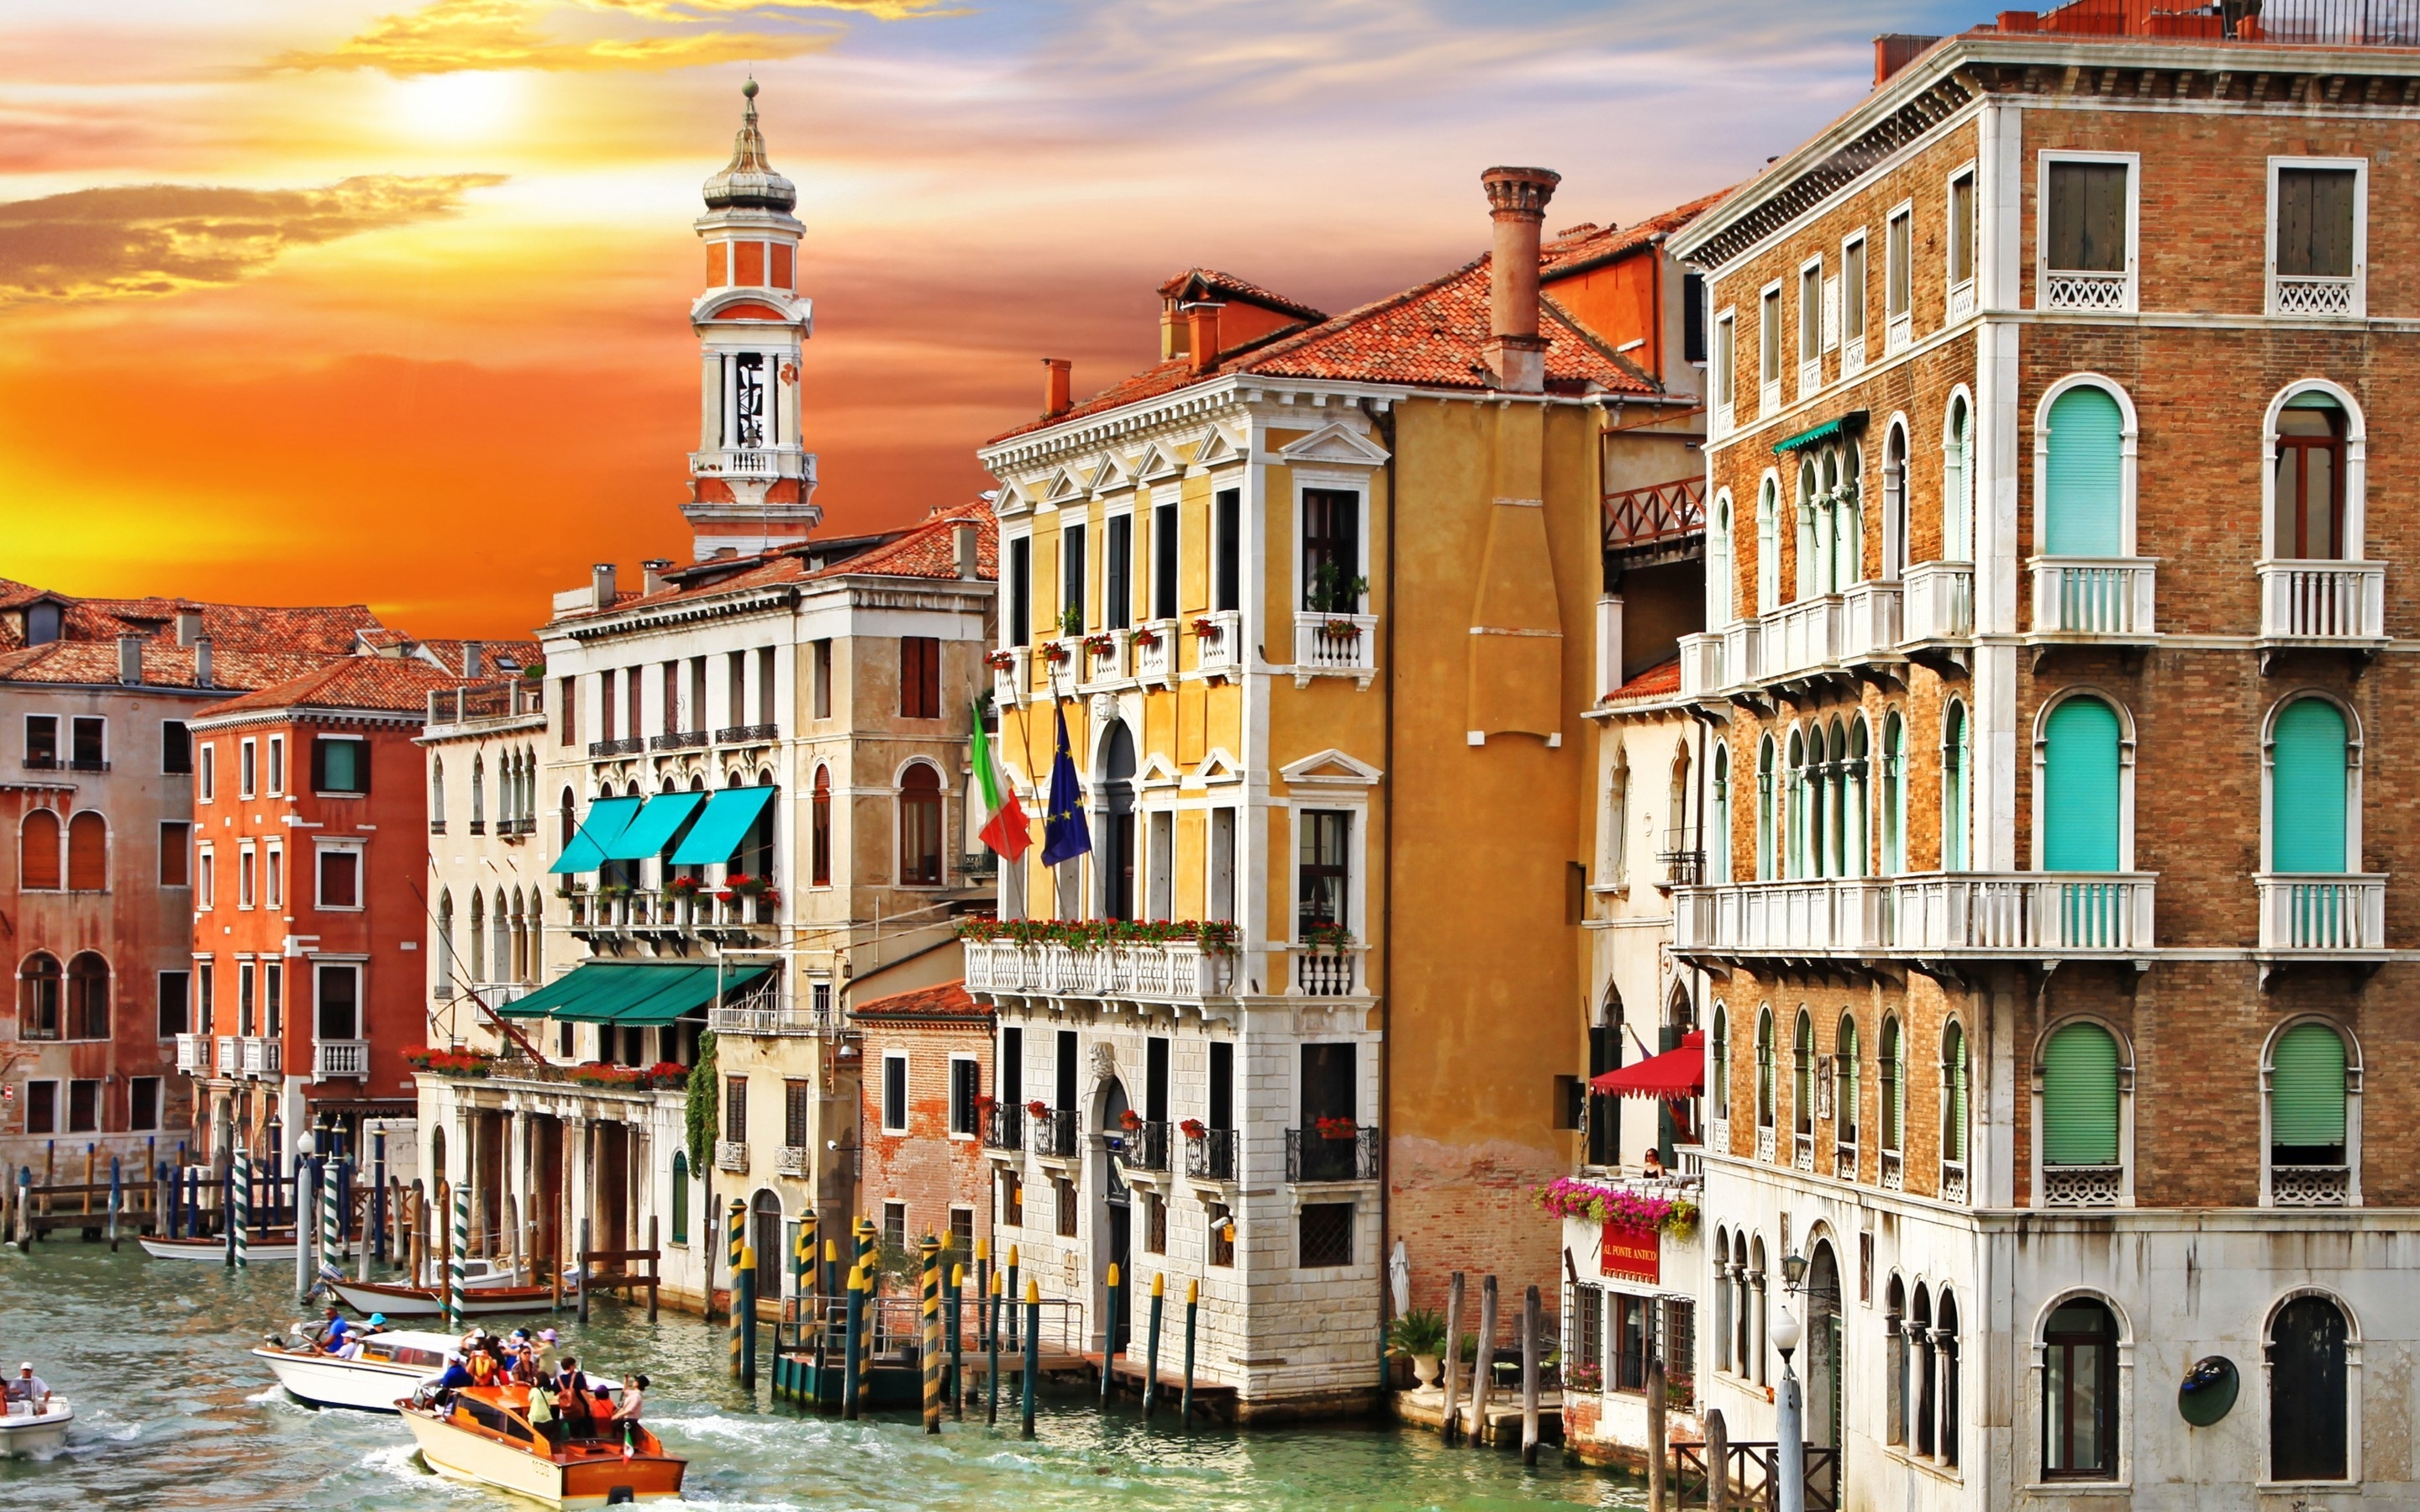 Colorful Venice Corner for 2880 x 1800 Retina Display resolution